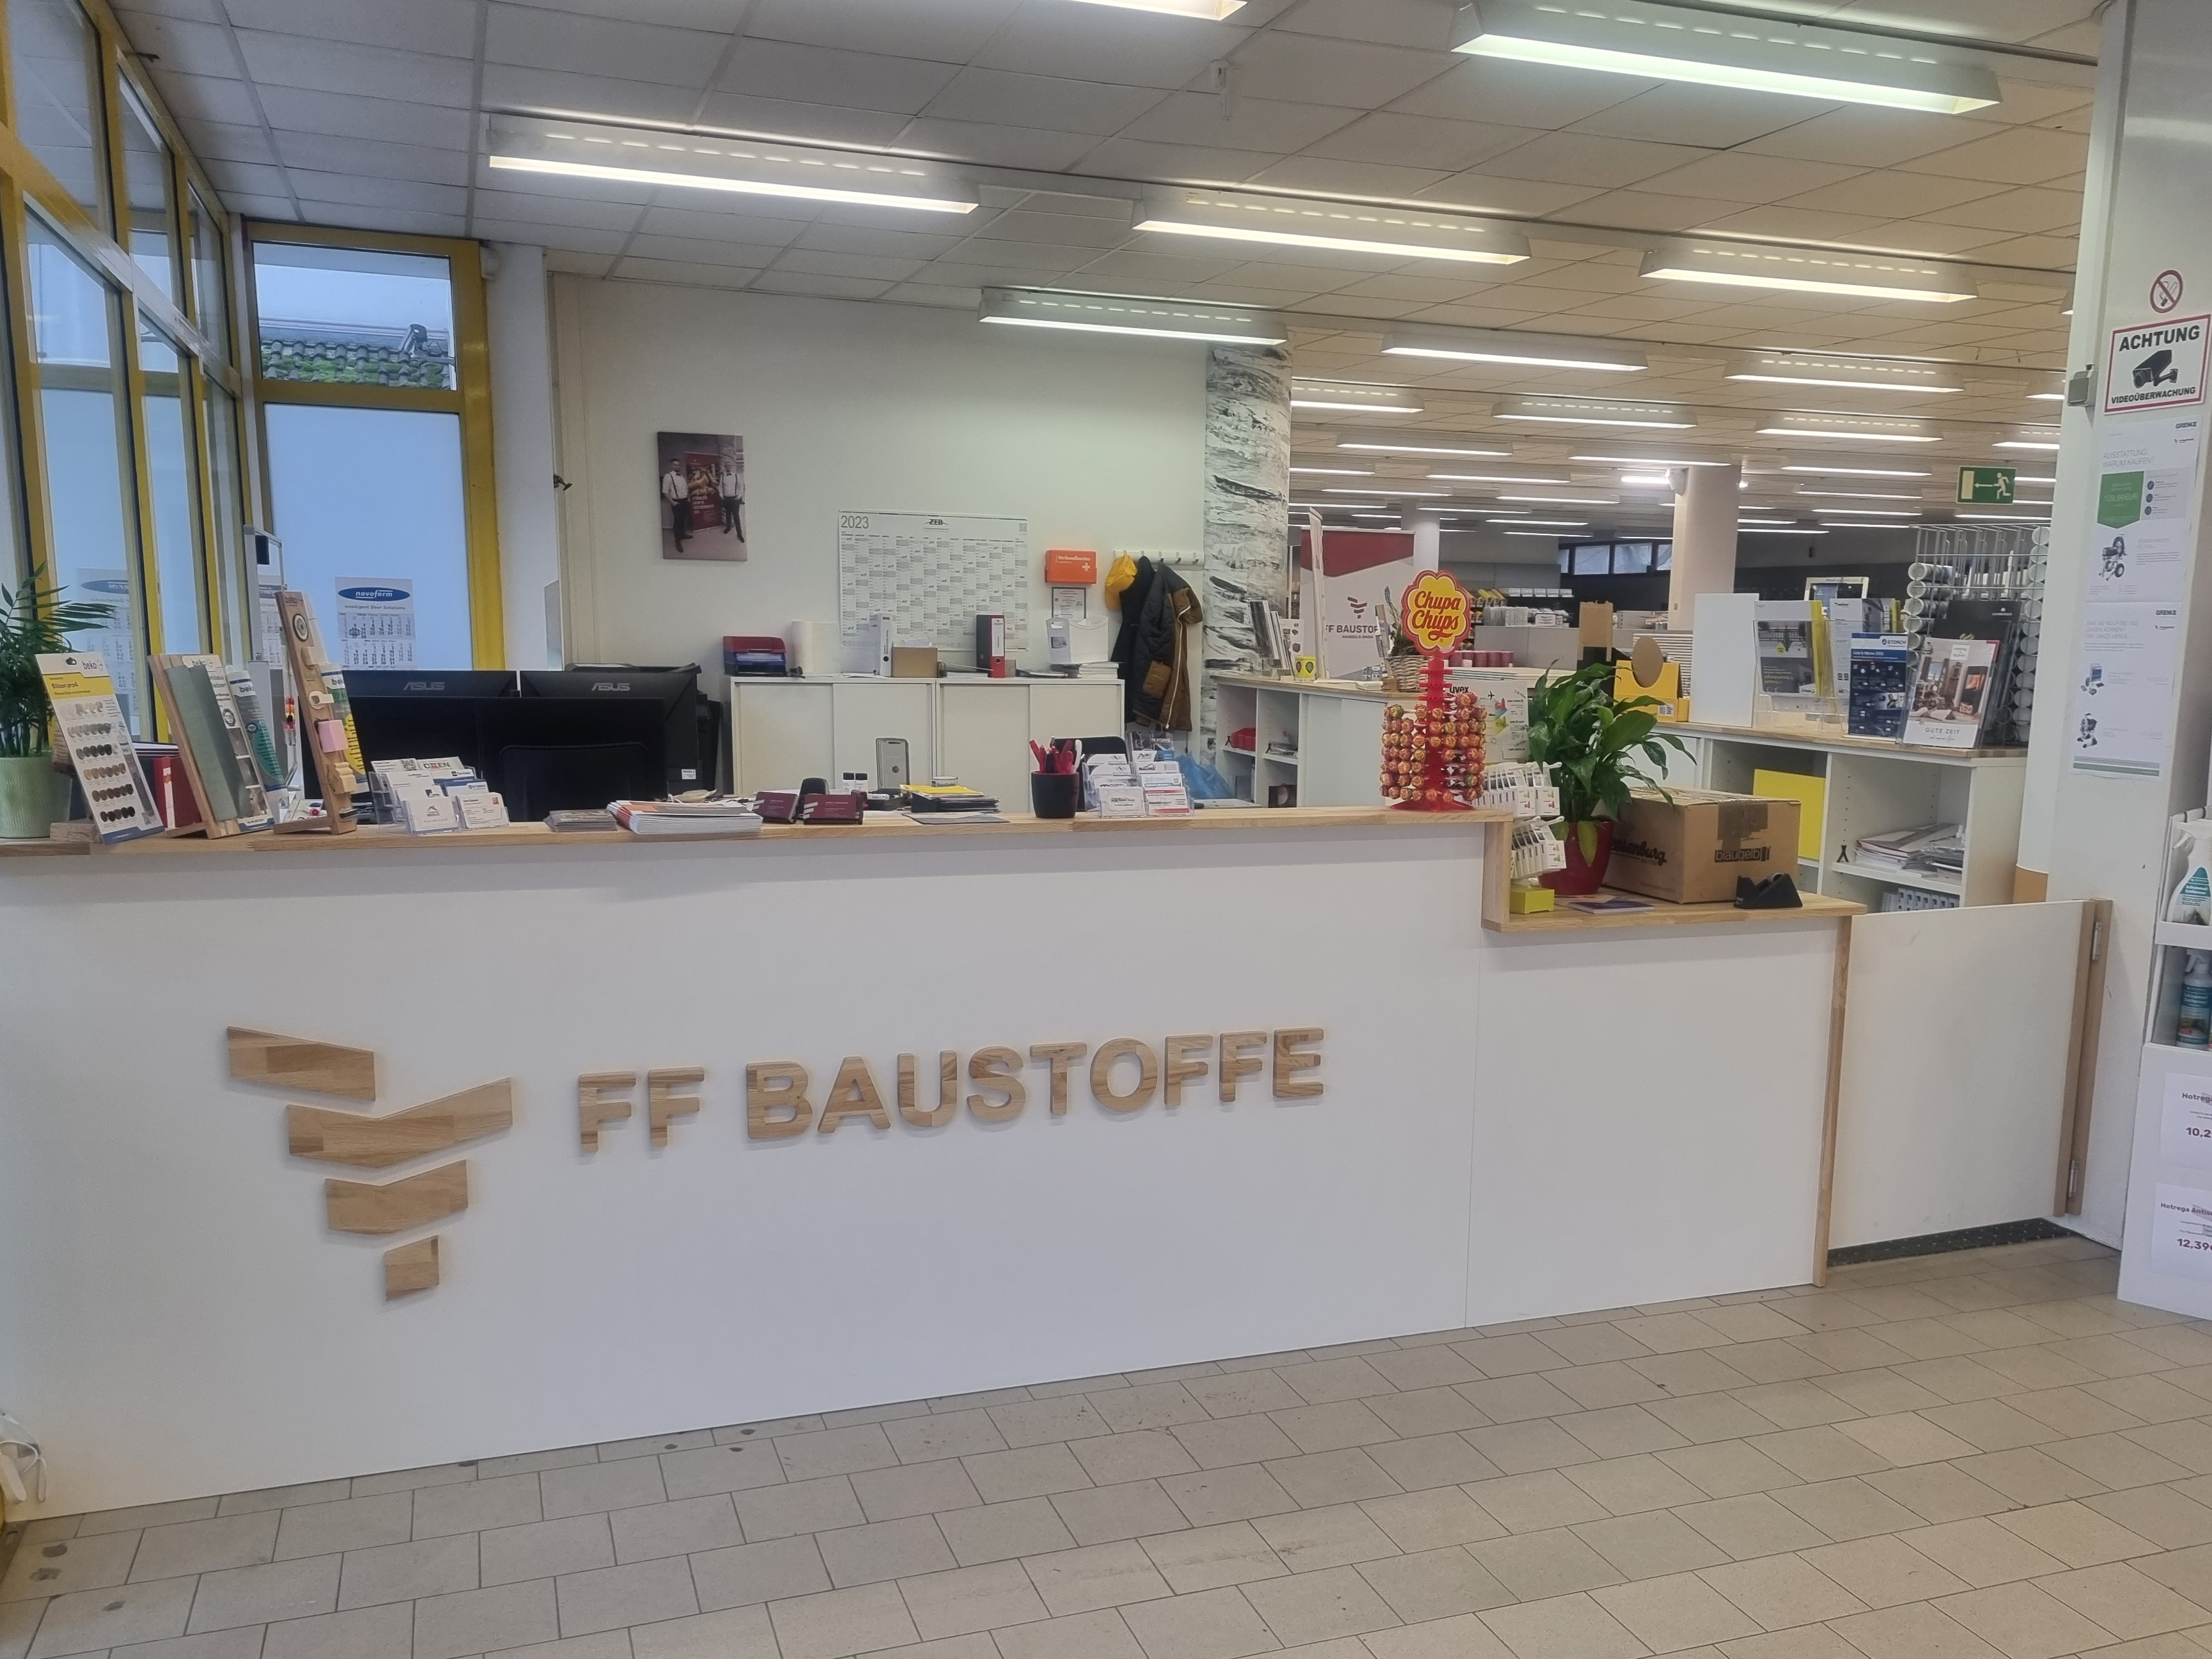 FF Baustoffe Handels GmbH, Niedervellmarer Straße 8 in Kassel